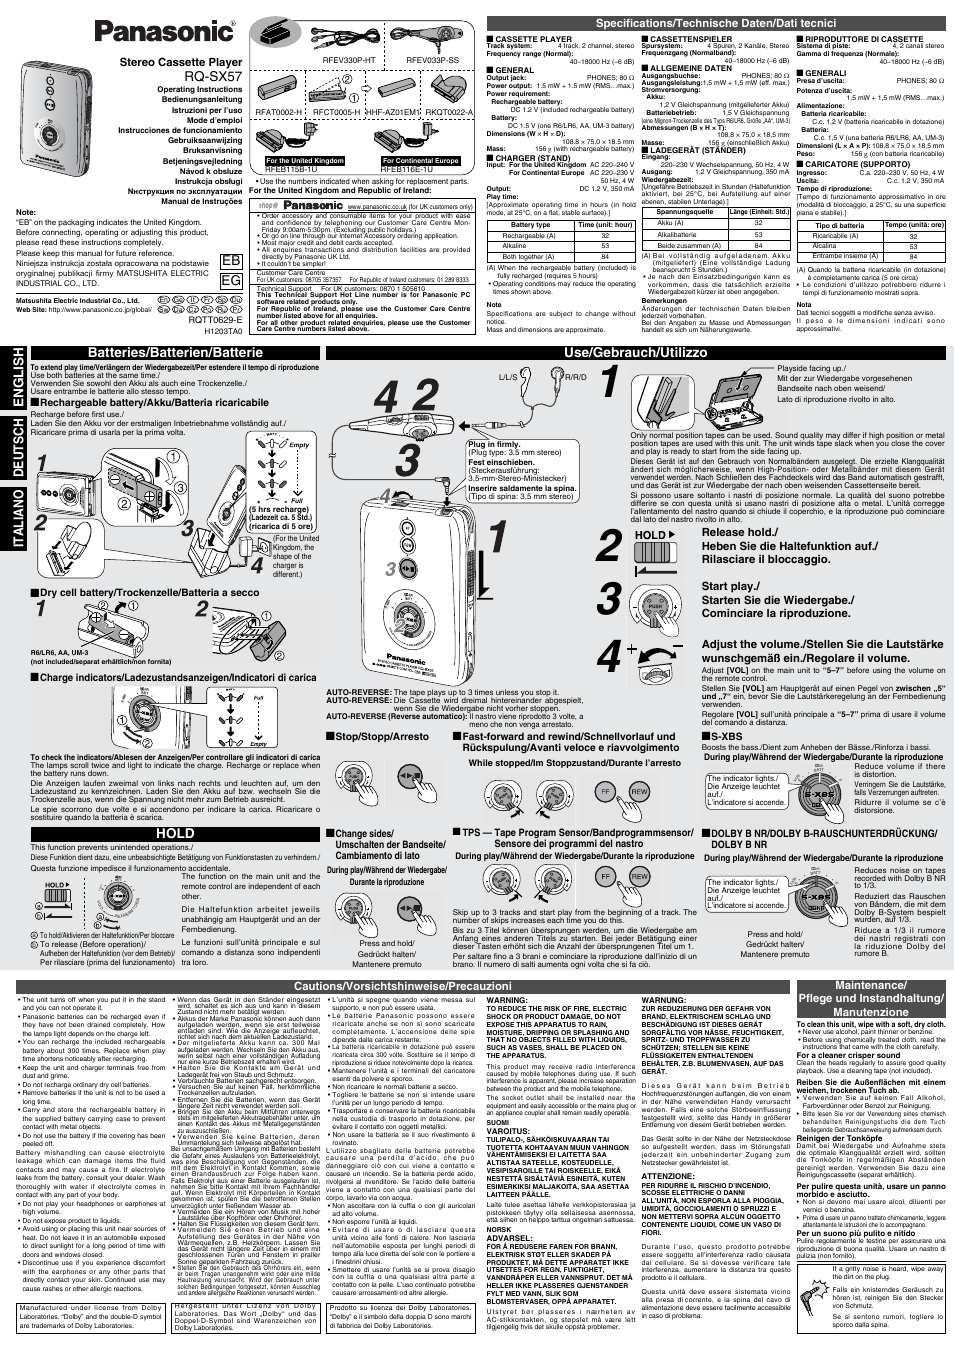 Panasonic RQSX57 User Manual | 4 pages